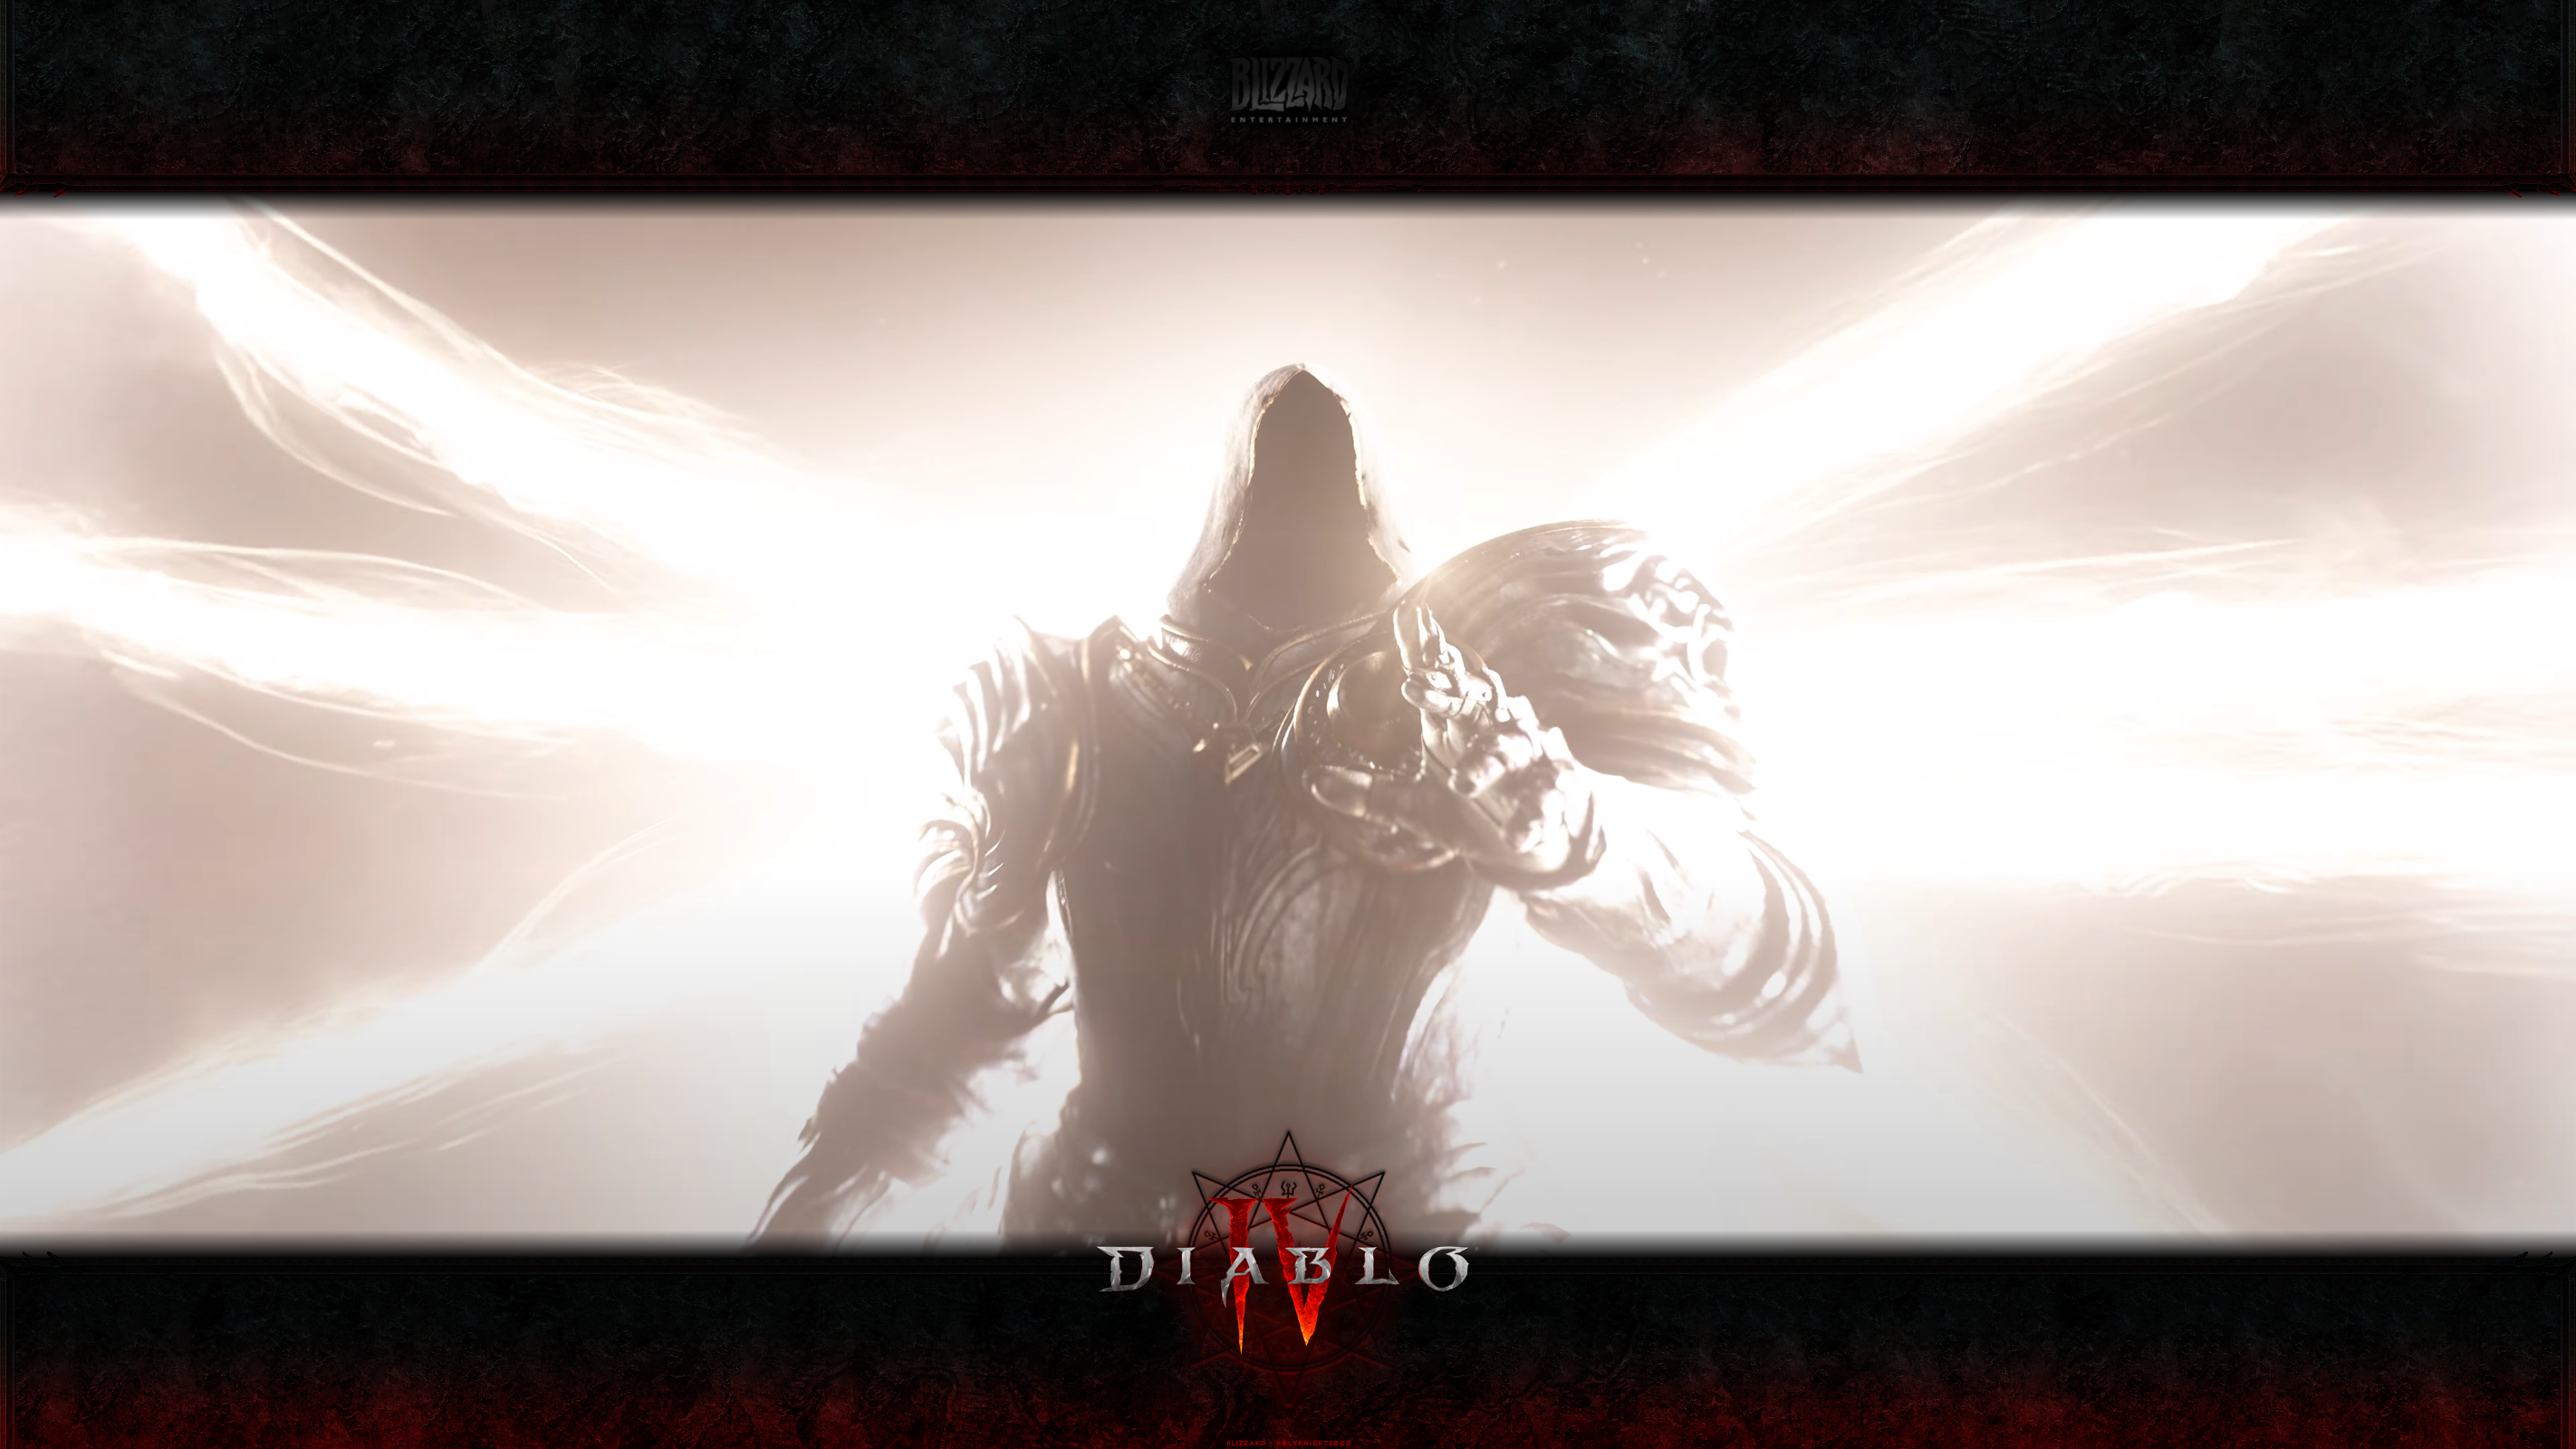 Diablo IV: The Release Date Trailer #19